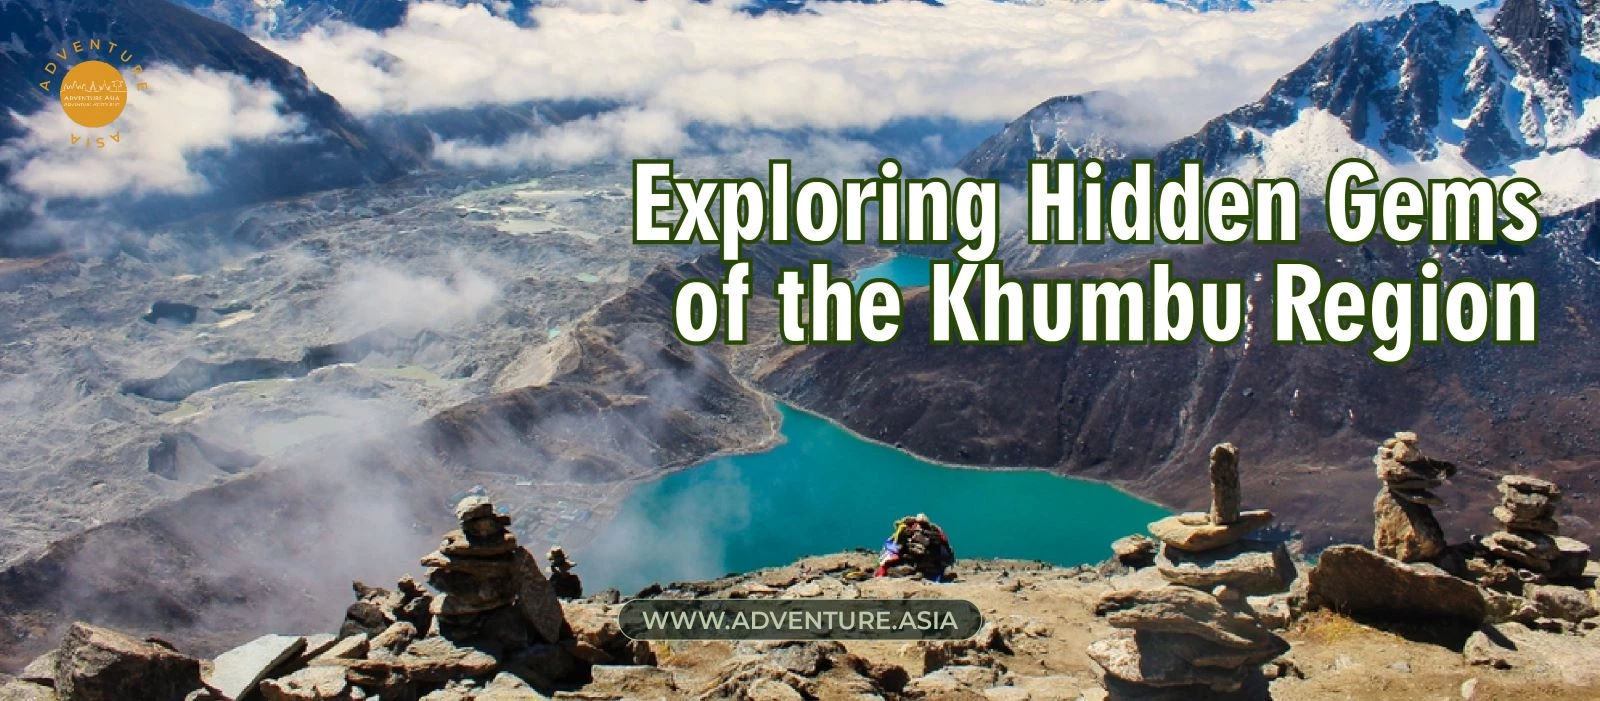 Beyond Nepal trekking Everest Base Camp: Exploring Hidden Gems of the Khumbu Region